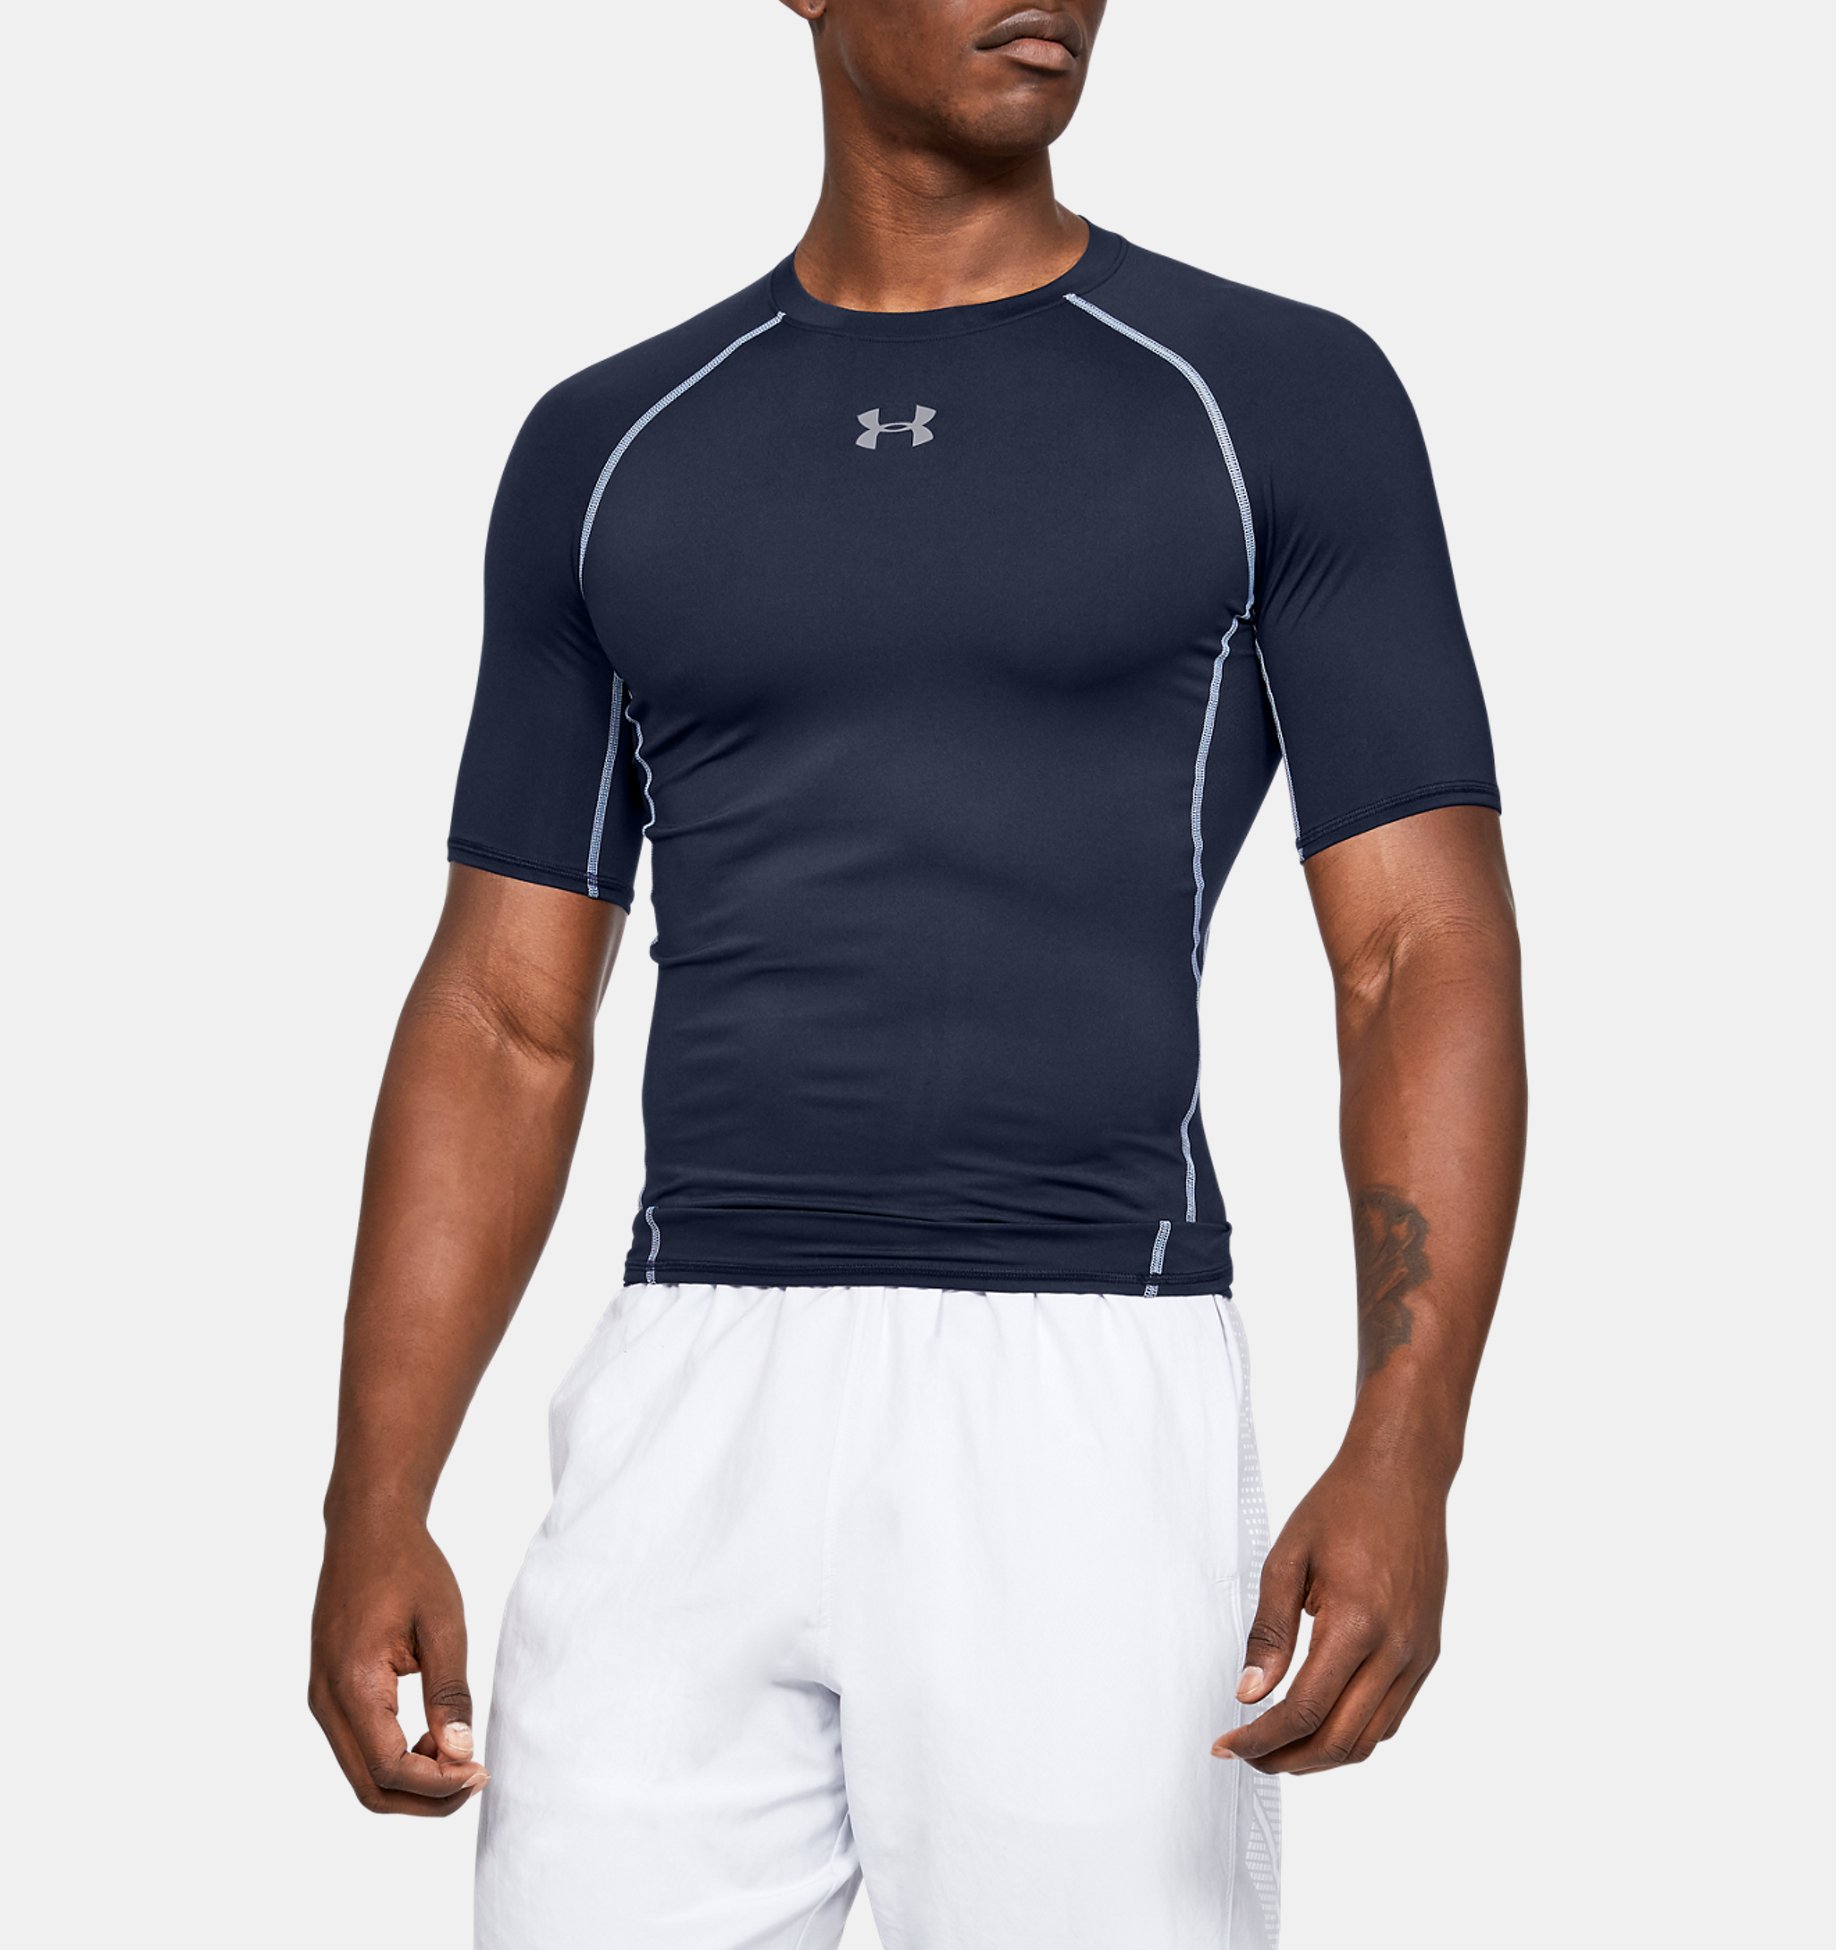 Men Compression Under Base Layer Tight Tops Vest Sports T-Shirt Shorts Pants HOT 